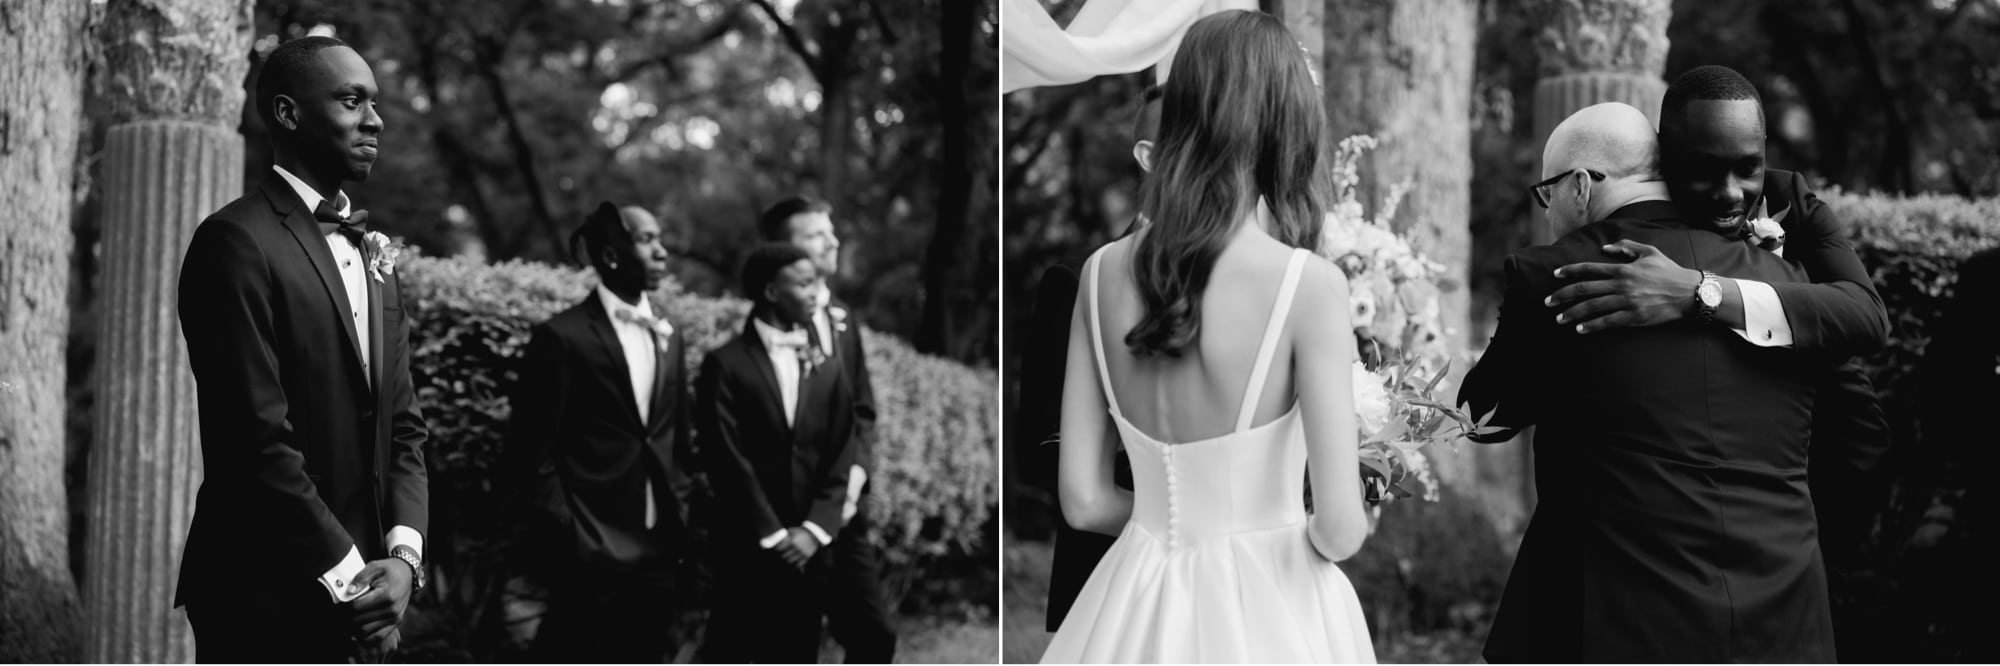 Black and white wedding ceremony photos